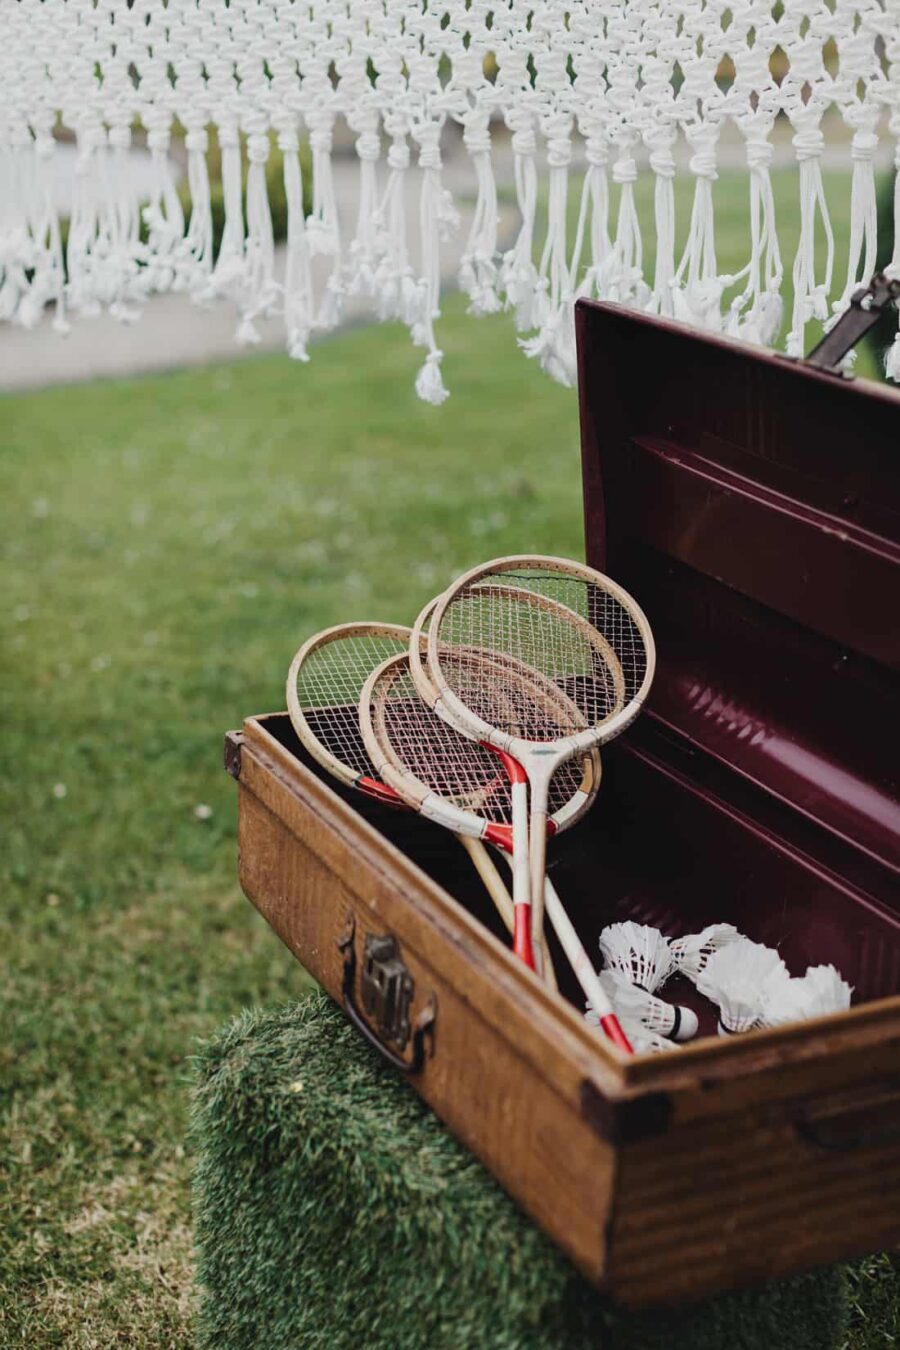 macrame badminton net and vintage rackets